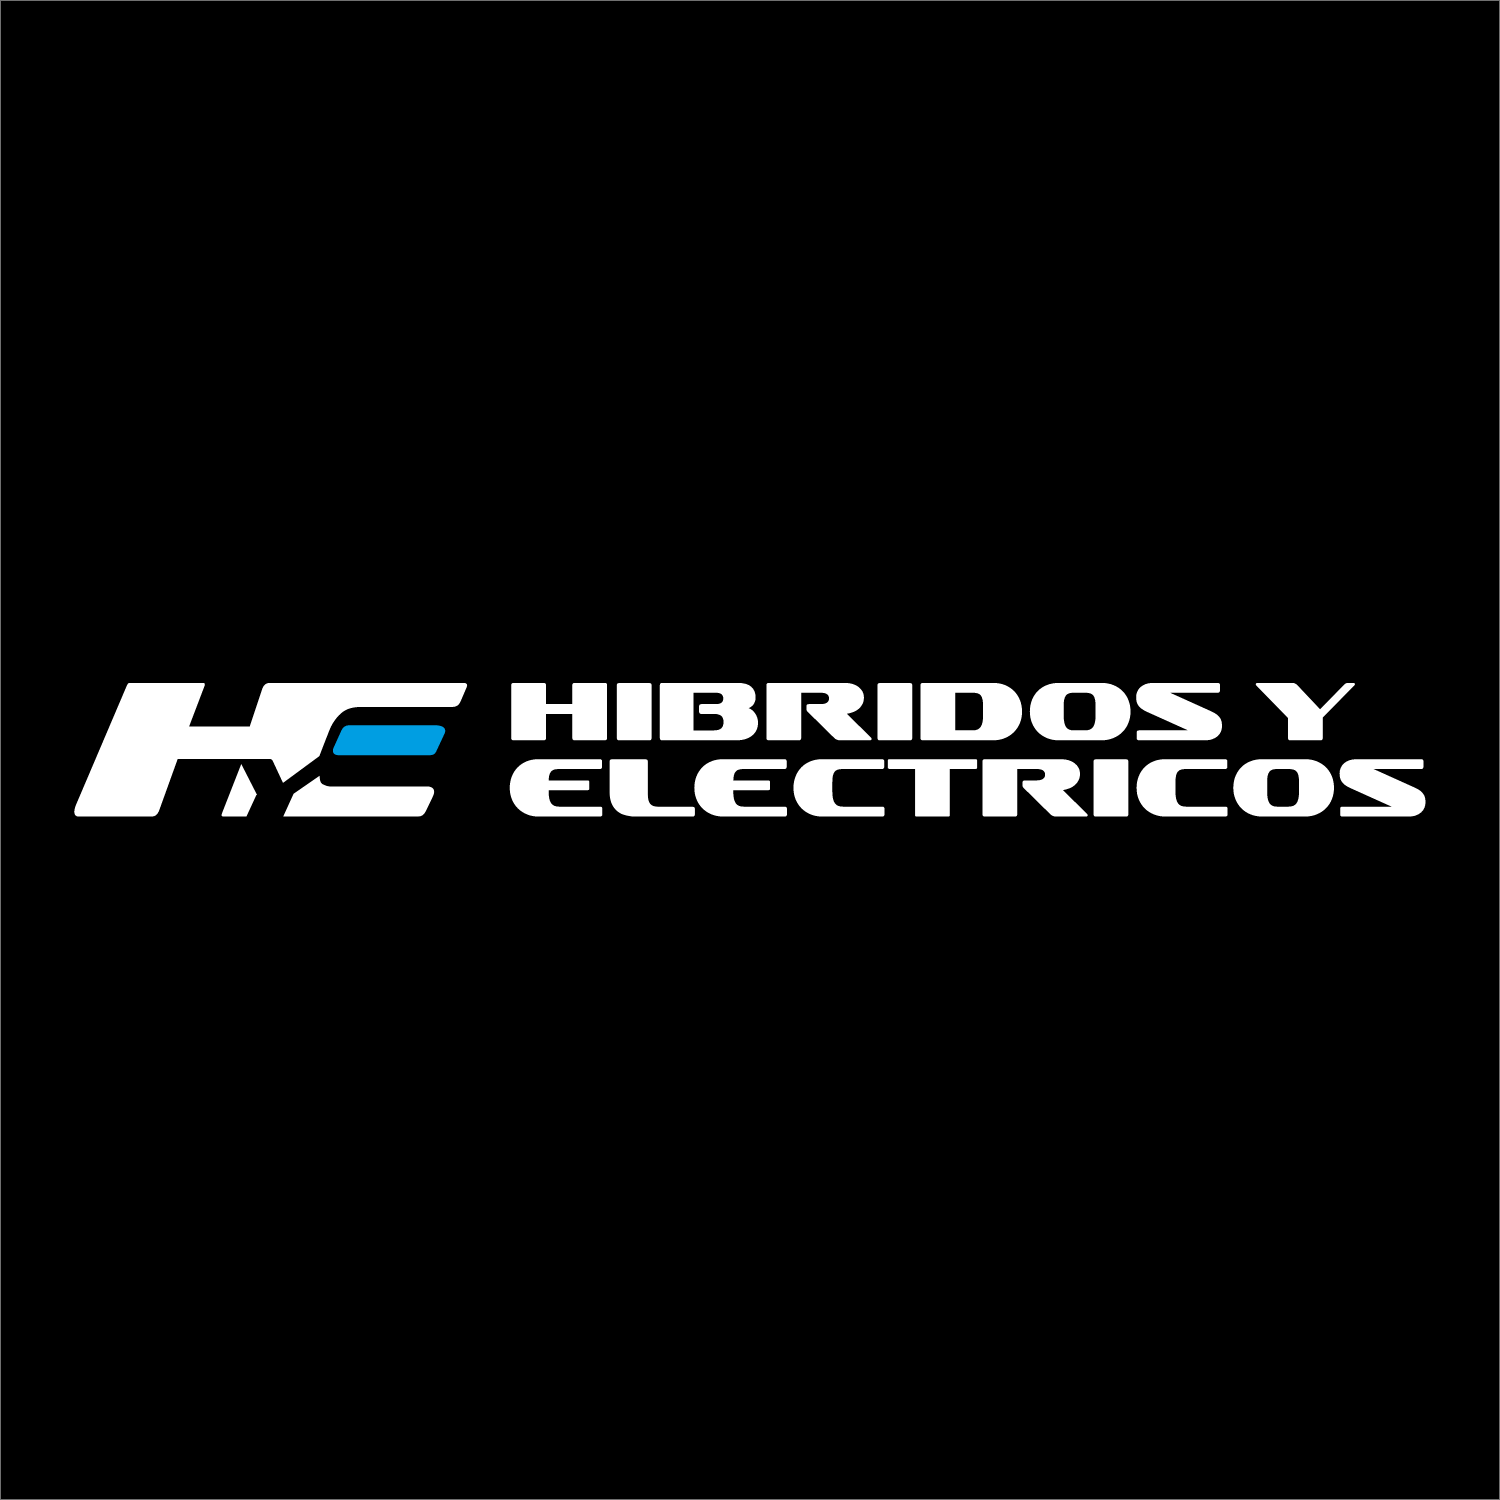 (c) Hibridosyelectricos.com